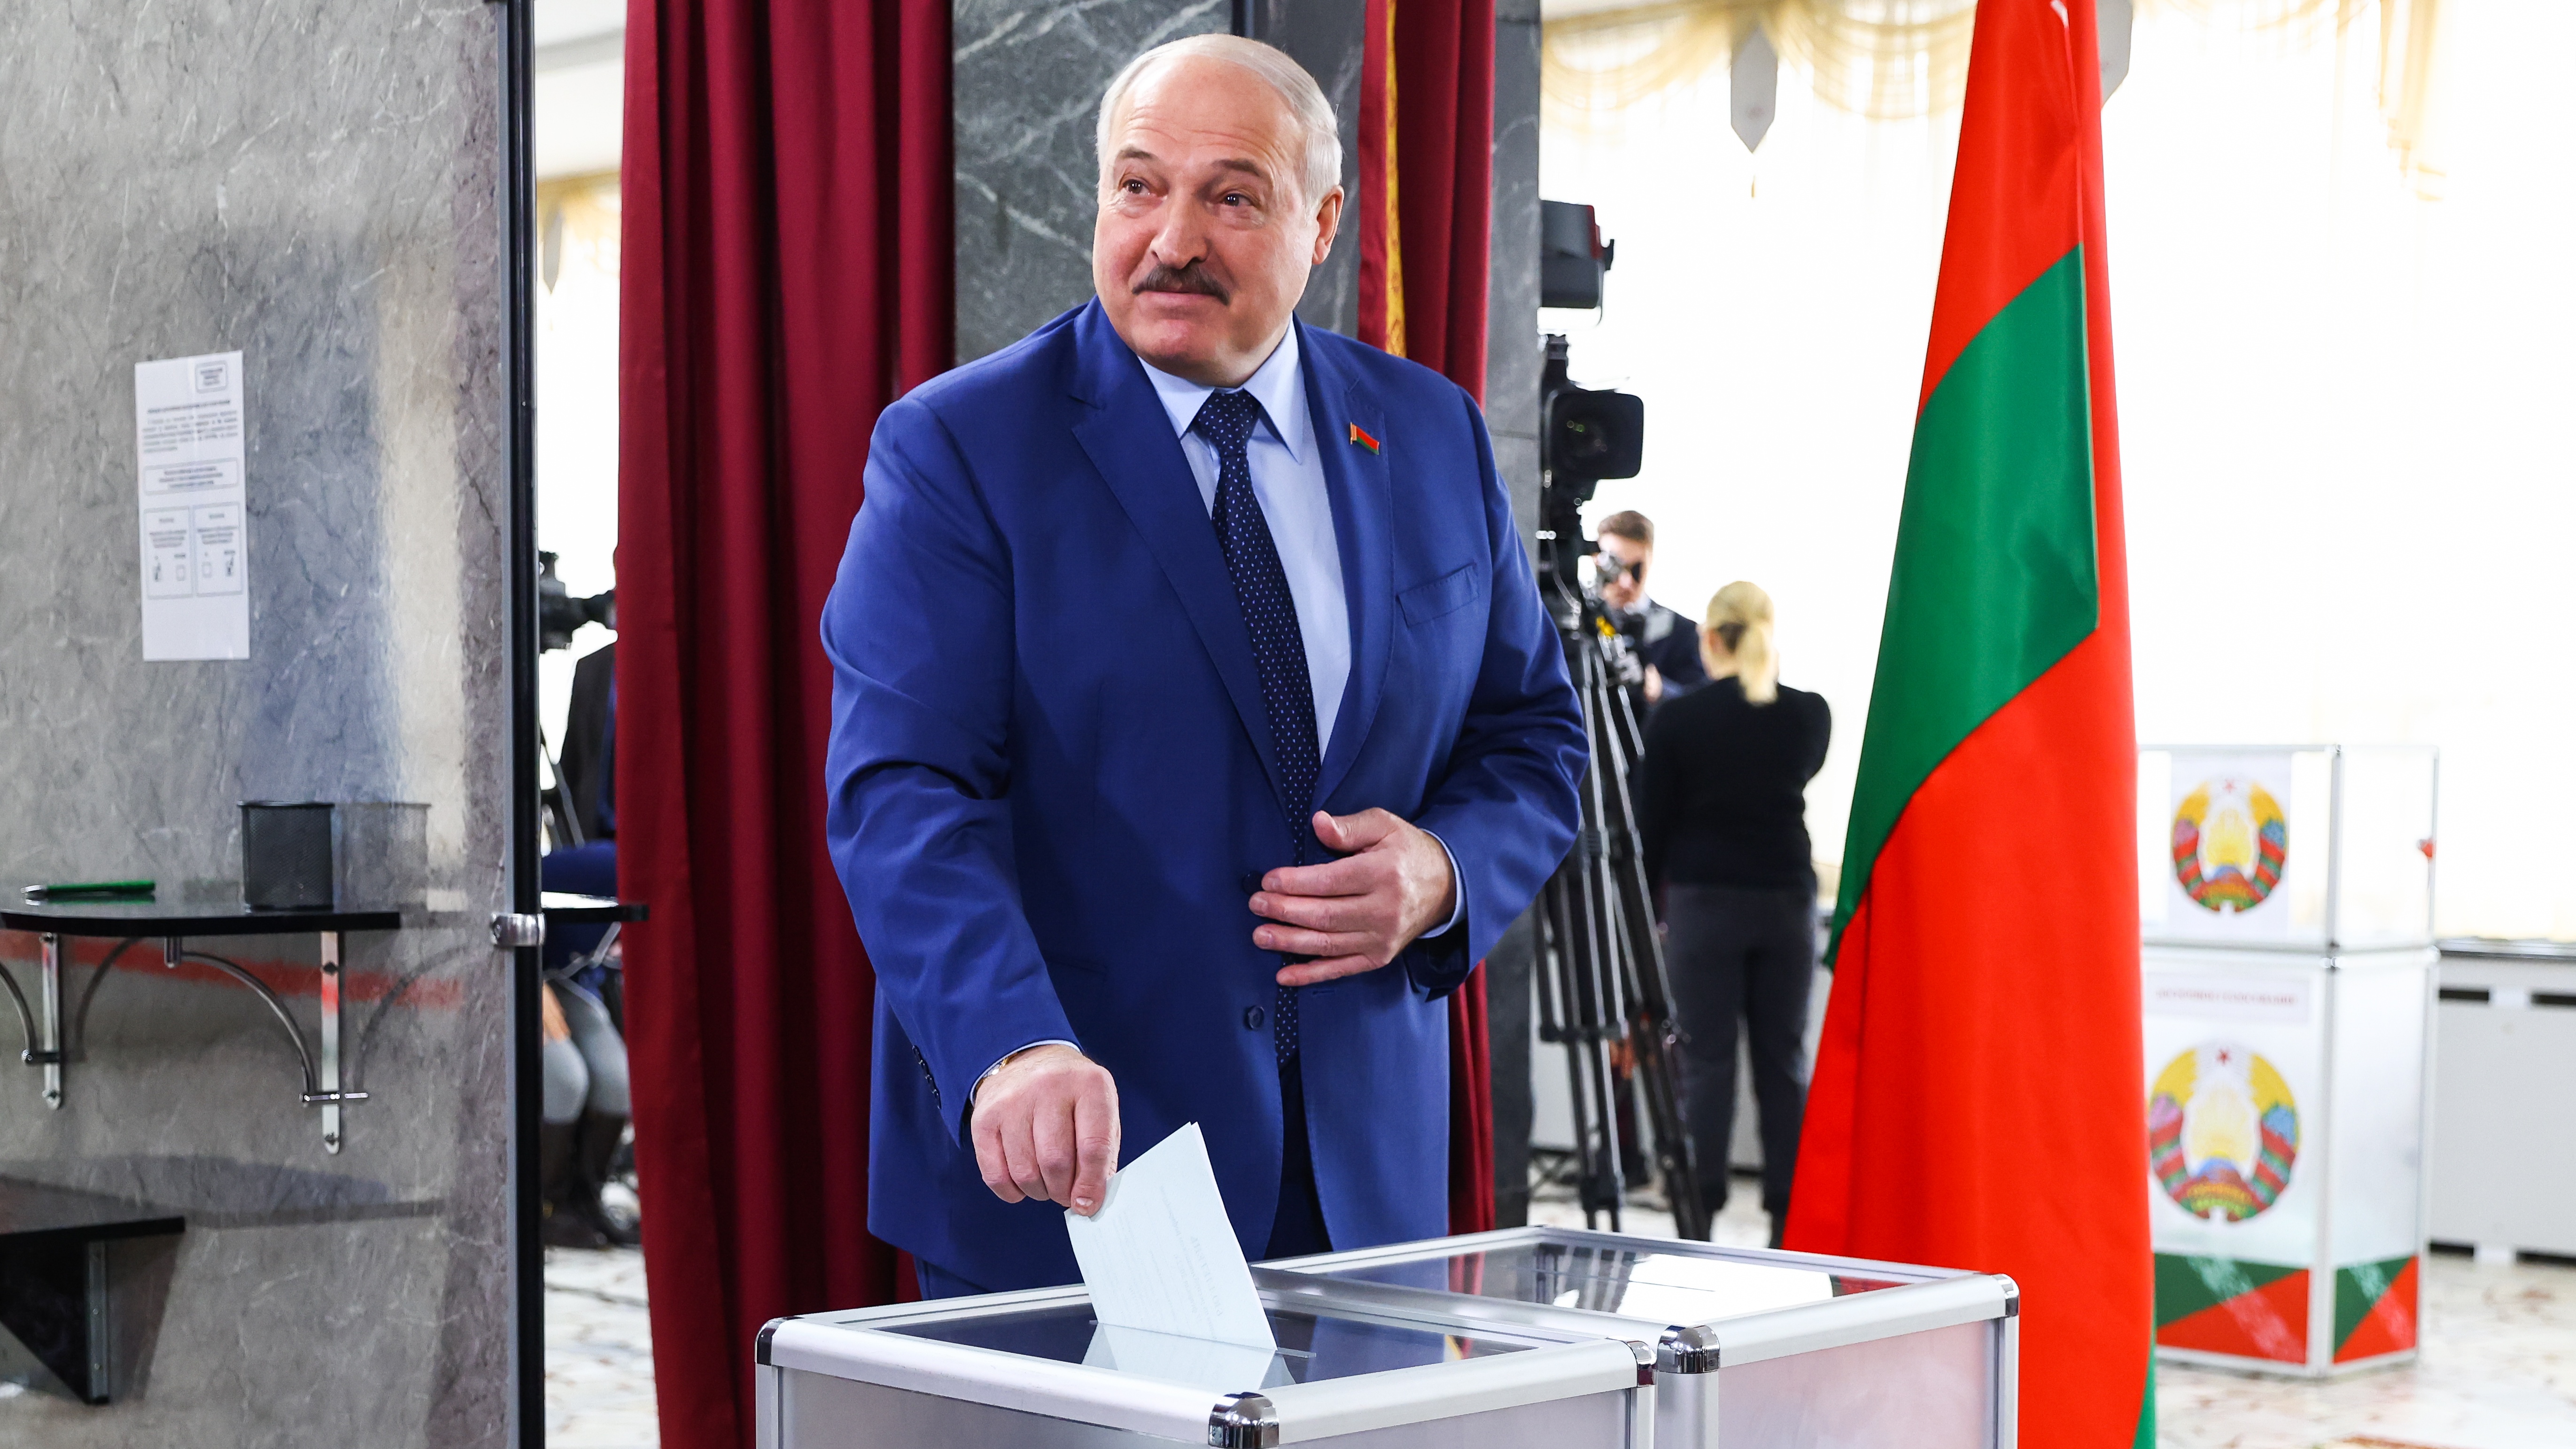 President Alexander Lukashenko votes in a referendum on Belarus’ nuclear status